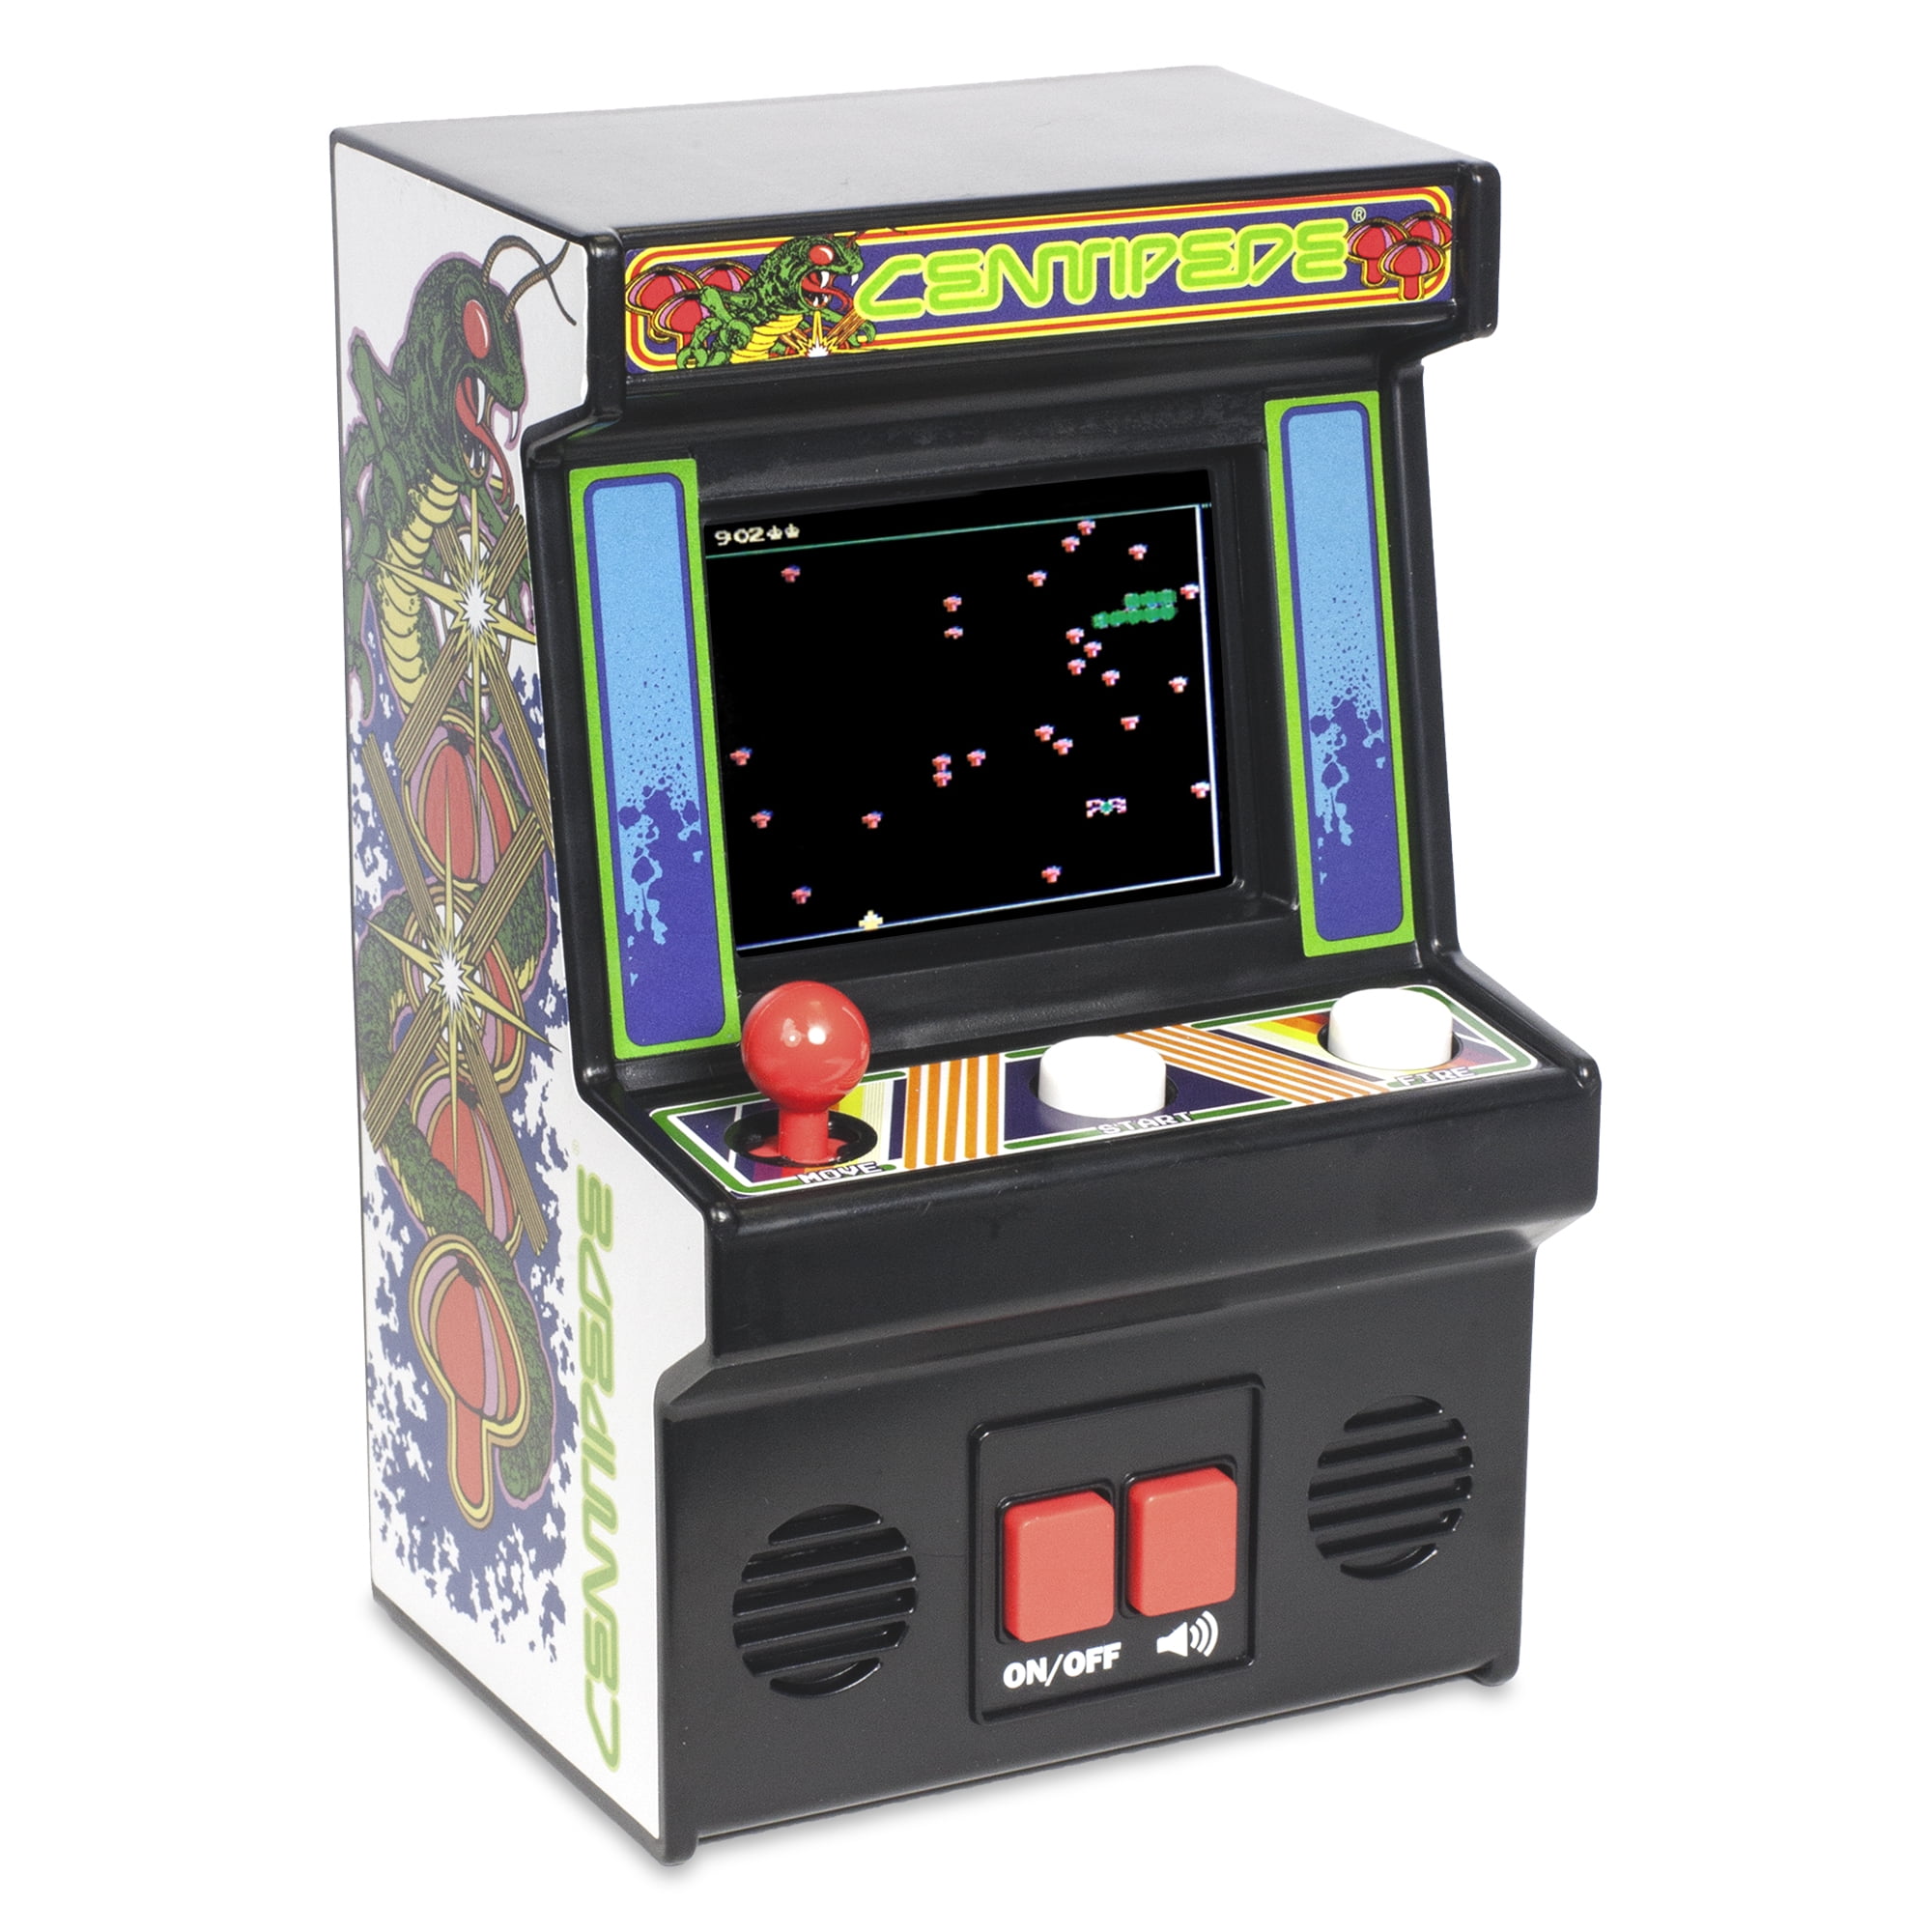 Centipede Mini Arcade Handheld Game Atari Classic Gameplay G4 for sale online 